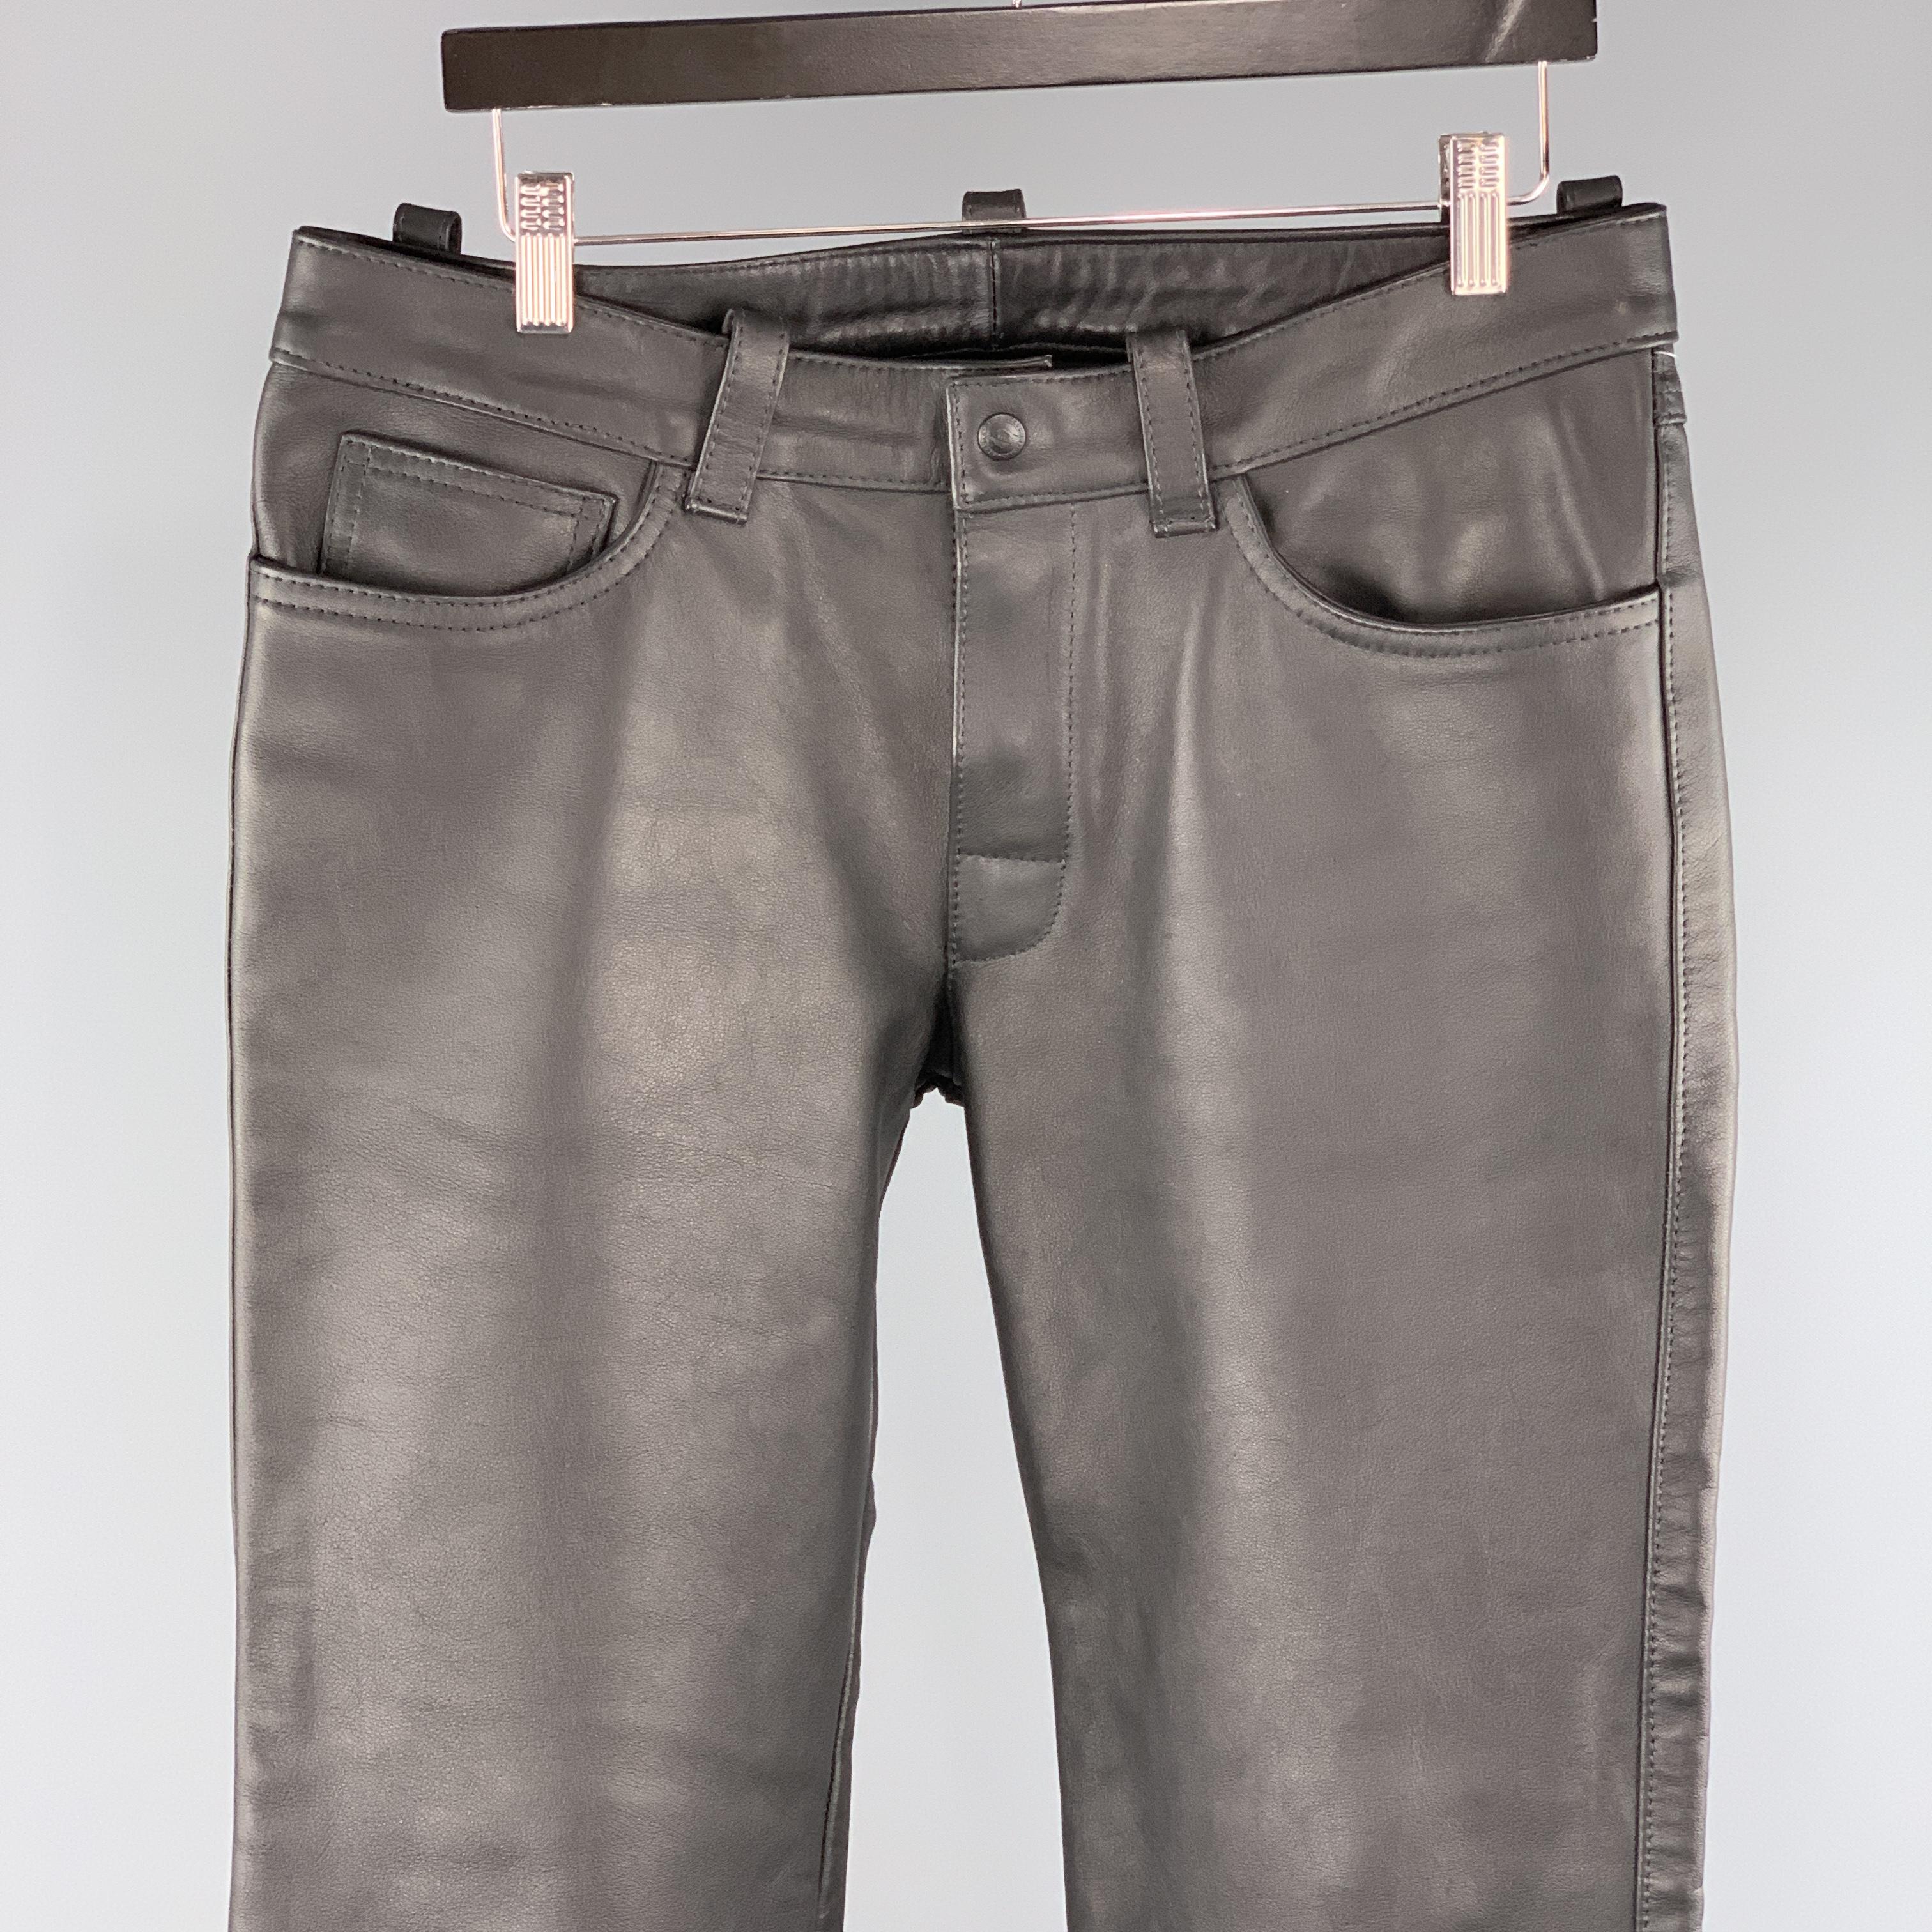 mr s leather pants